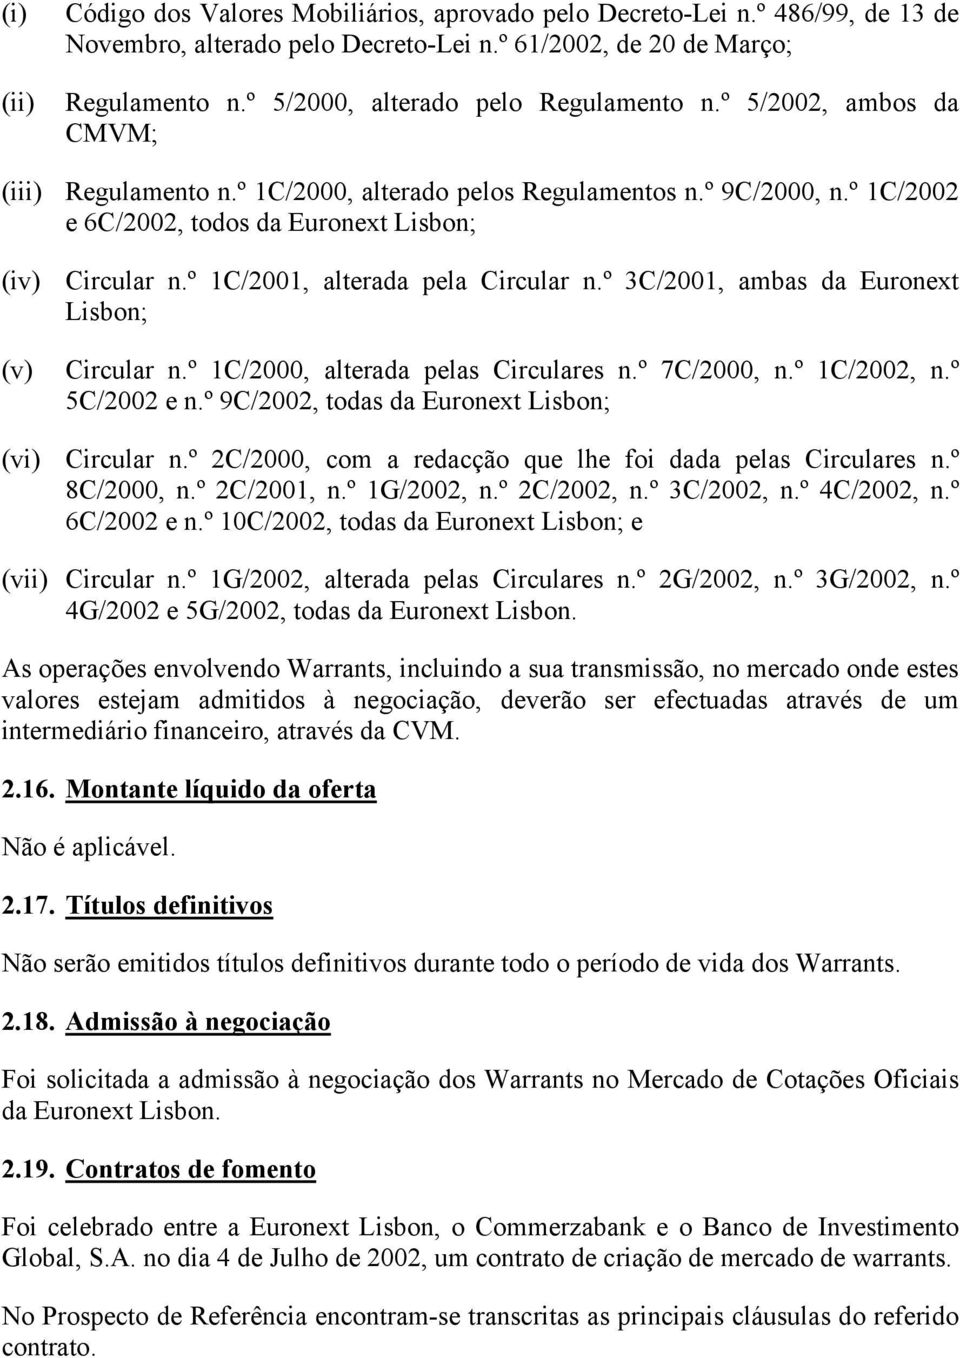 º 1C/2001, alterada pela Circular n.º 3C/2001, ambas da Euronext Lisbon; (v) Circular n.º 1C/2000, alterada pelas Circulares n.º 7C/2000, n.º 1C/2002, n.º 5C/2002 e n.